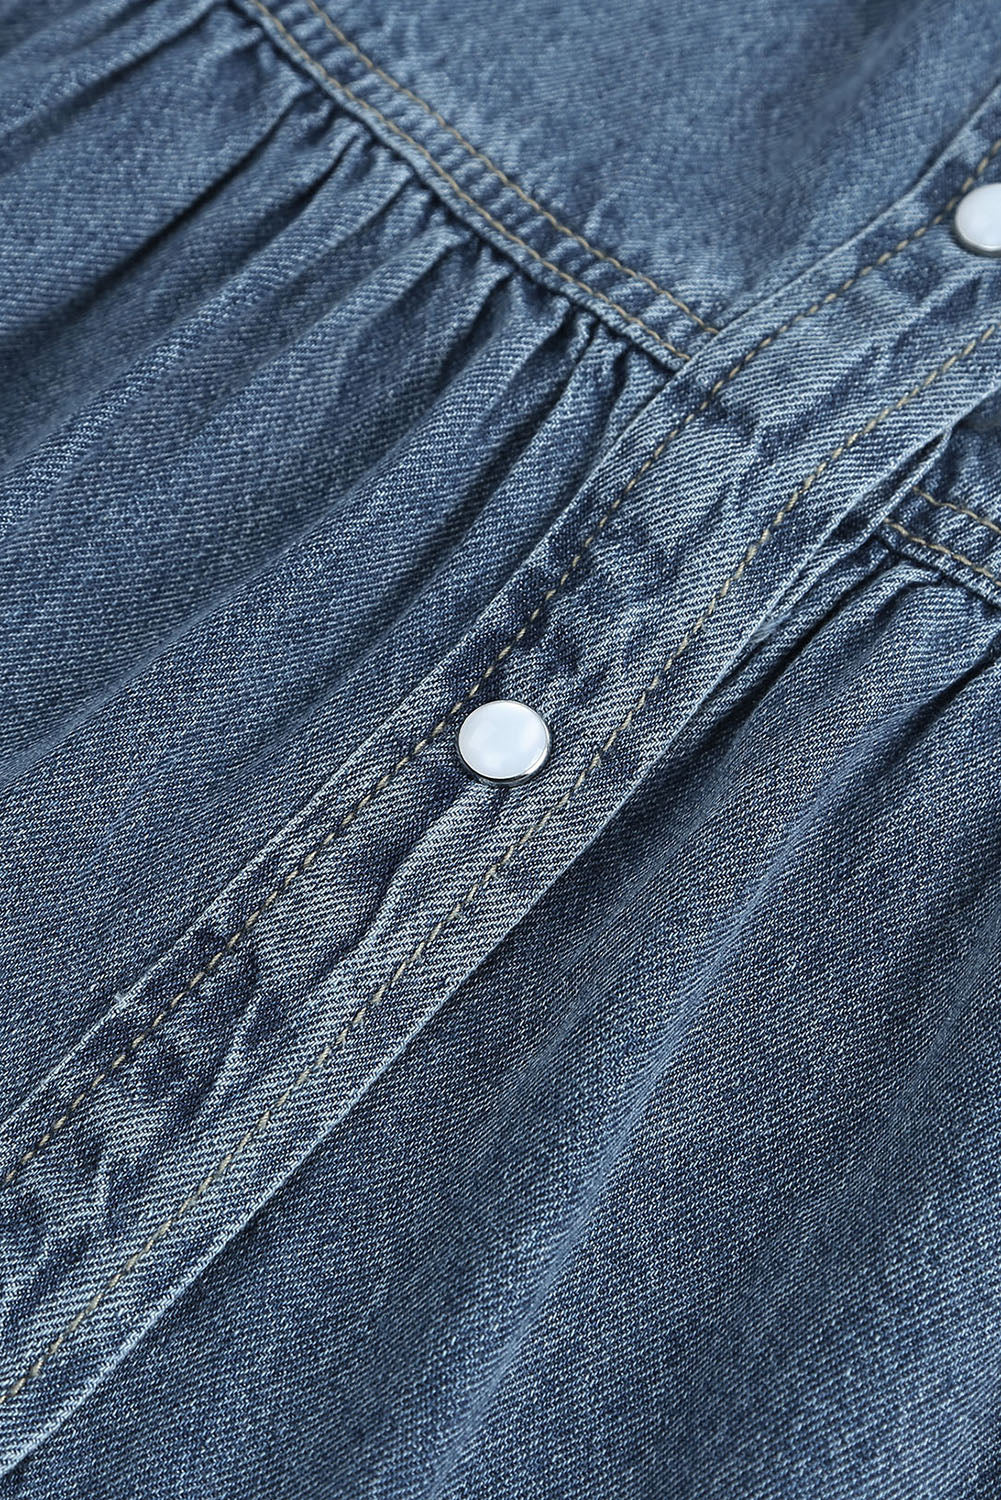 Gray Buttoned Frayed Pocket Short Sleeve Denim Dress